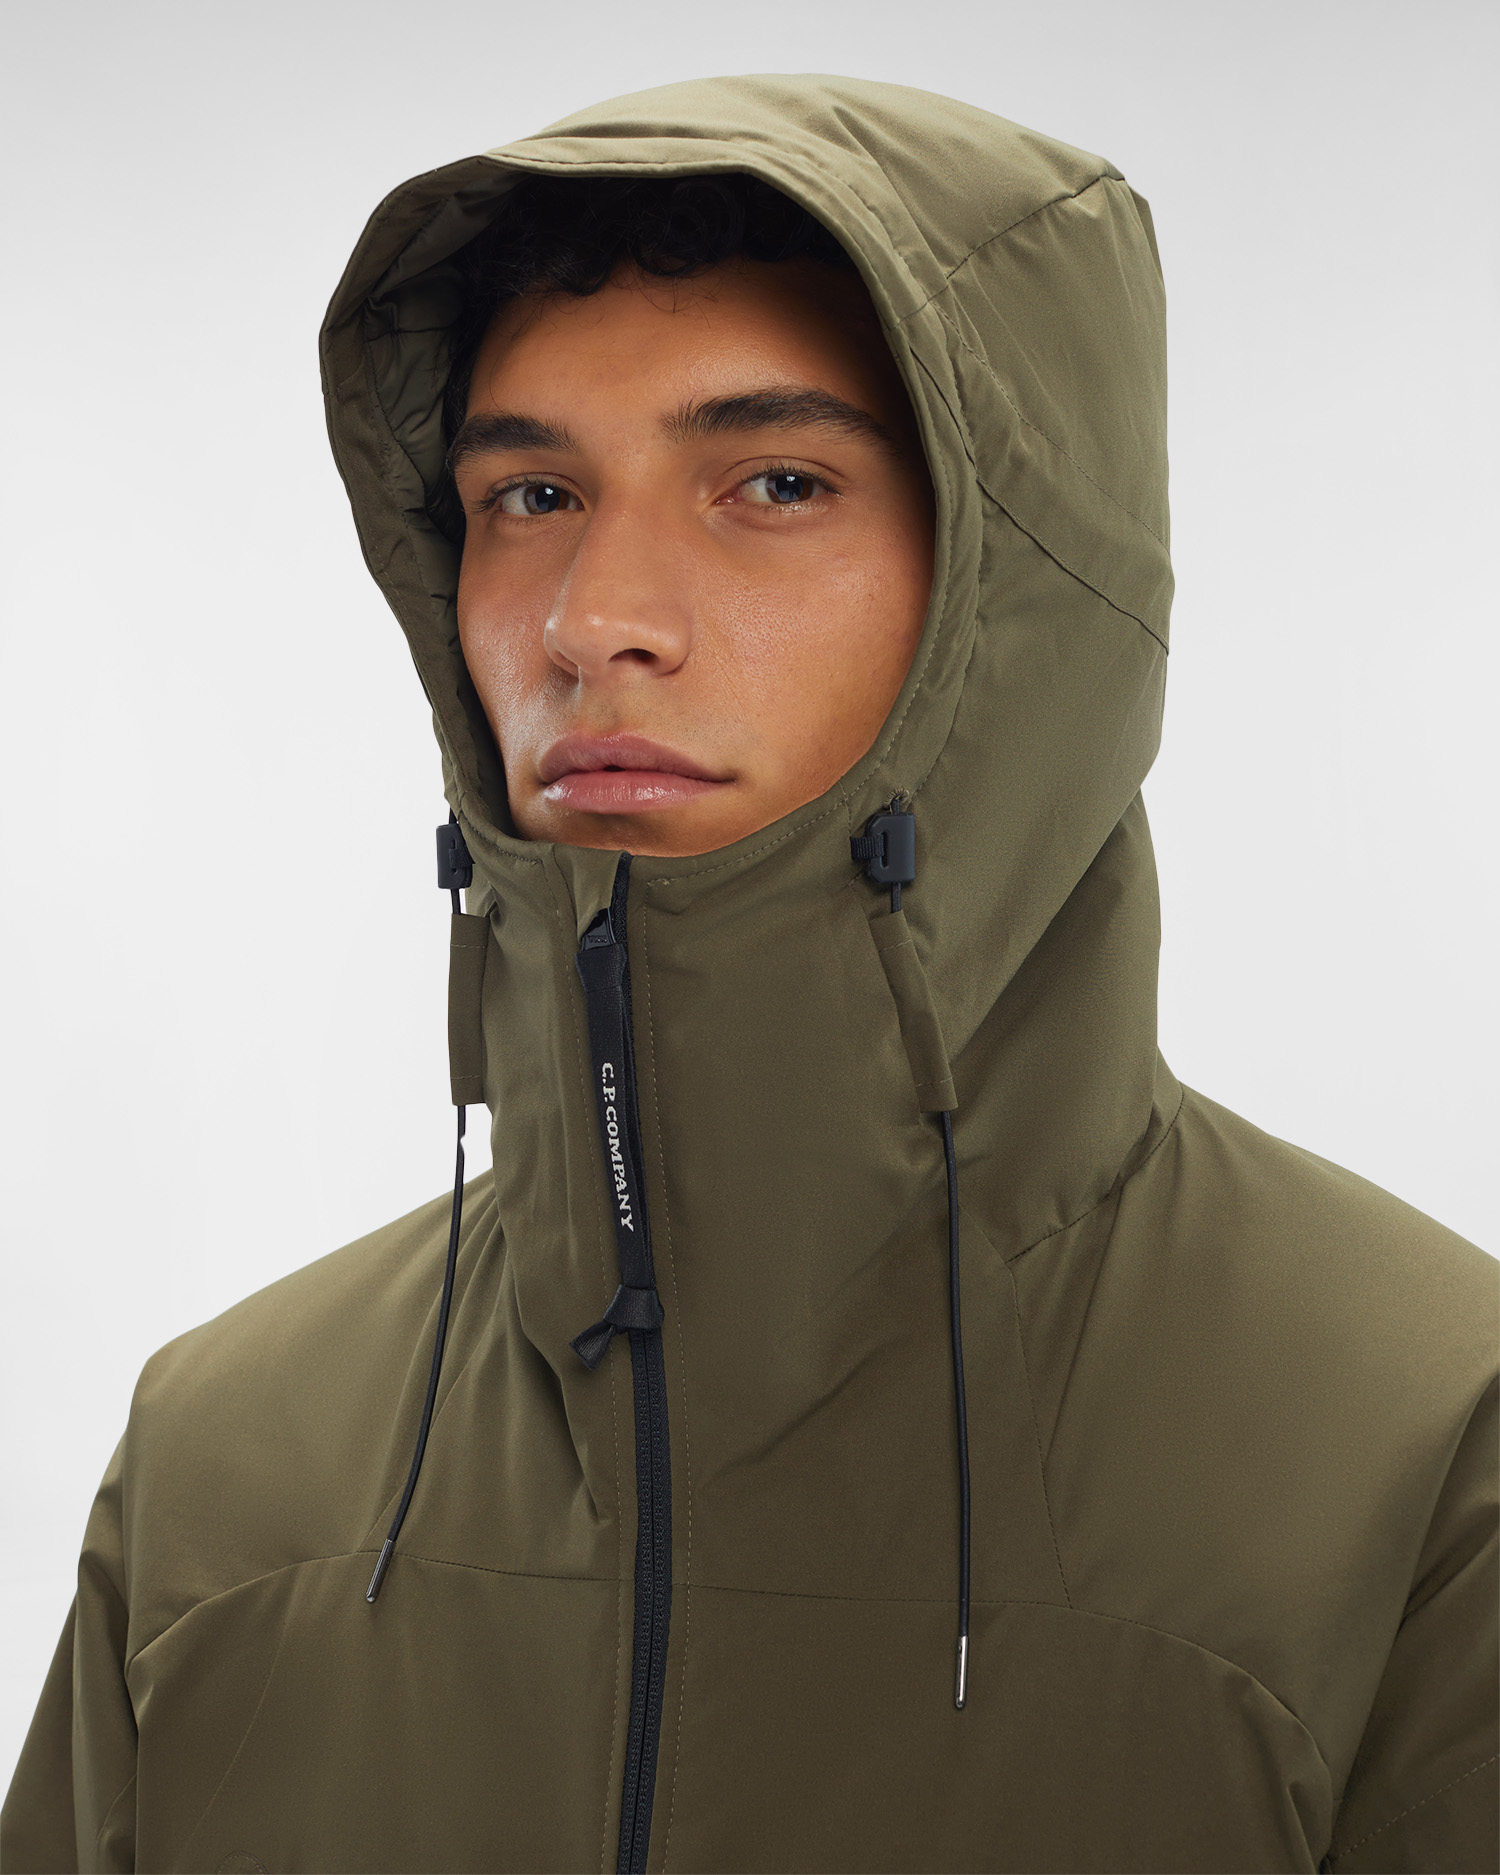 Pro-Tek Hooded Jacket | C.P. Company Online Store